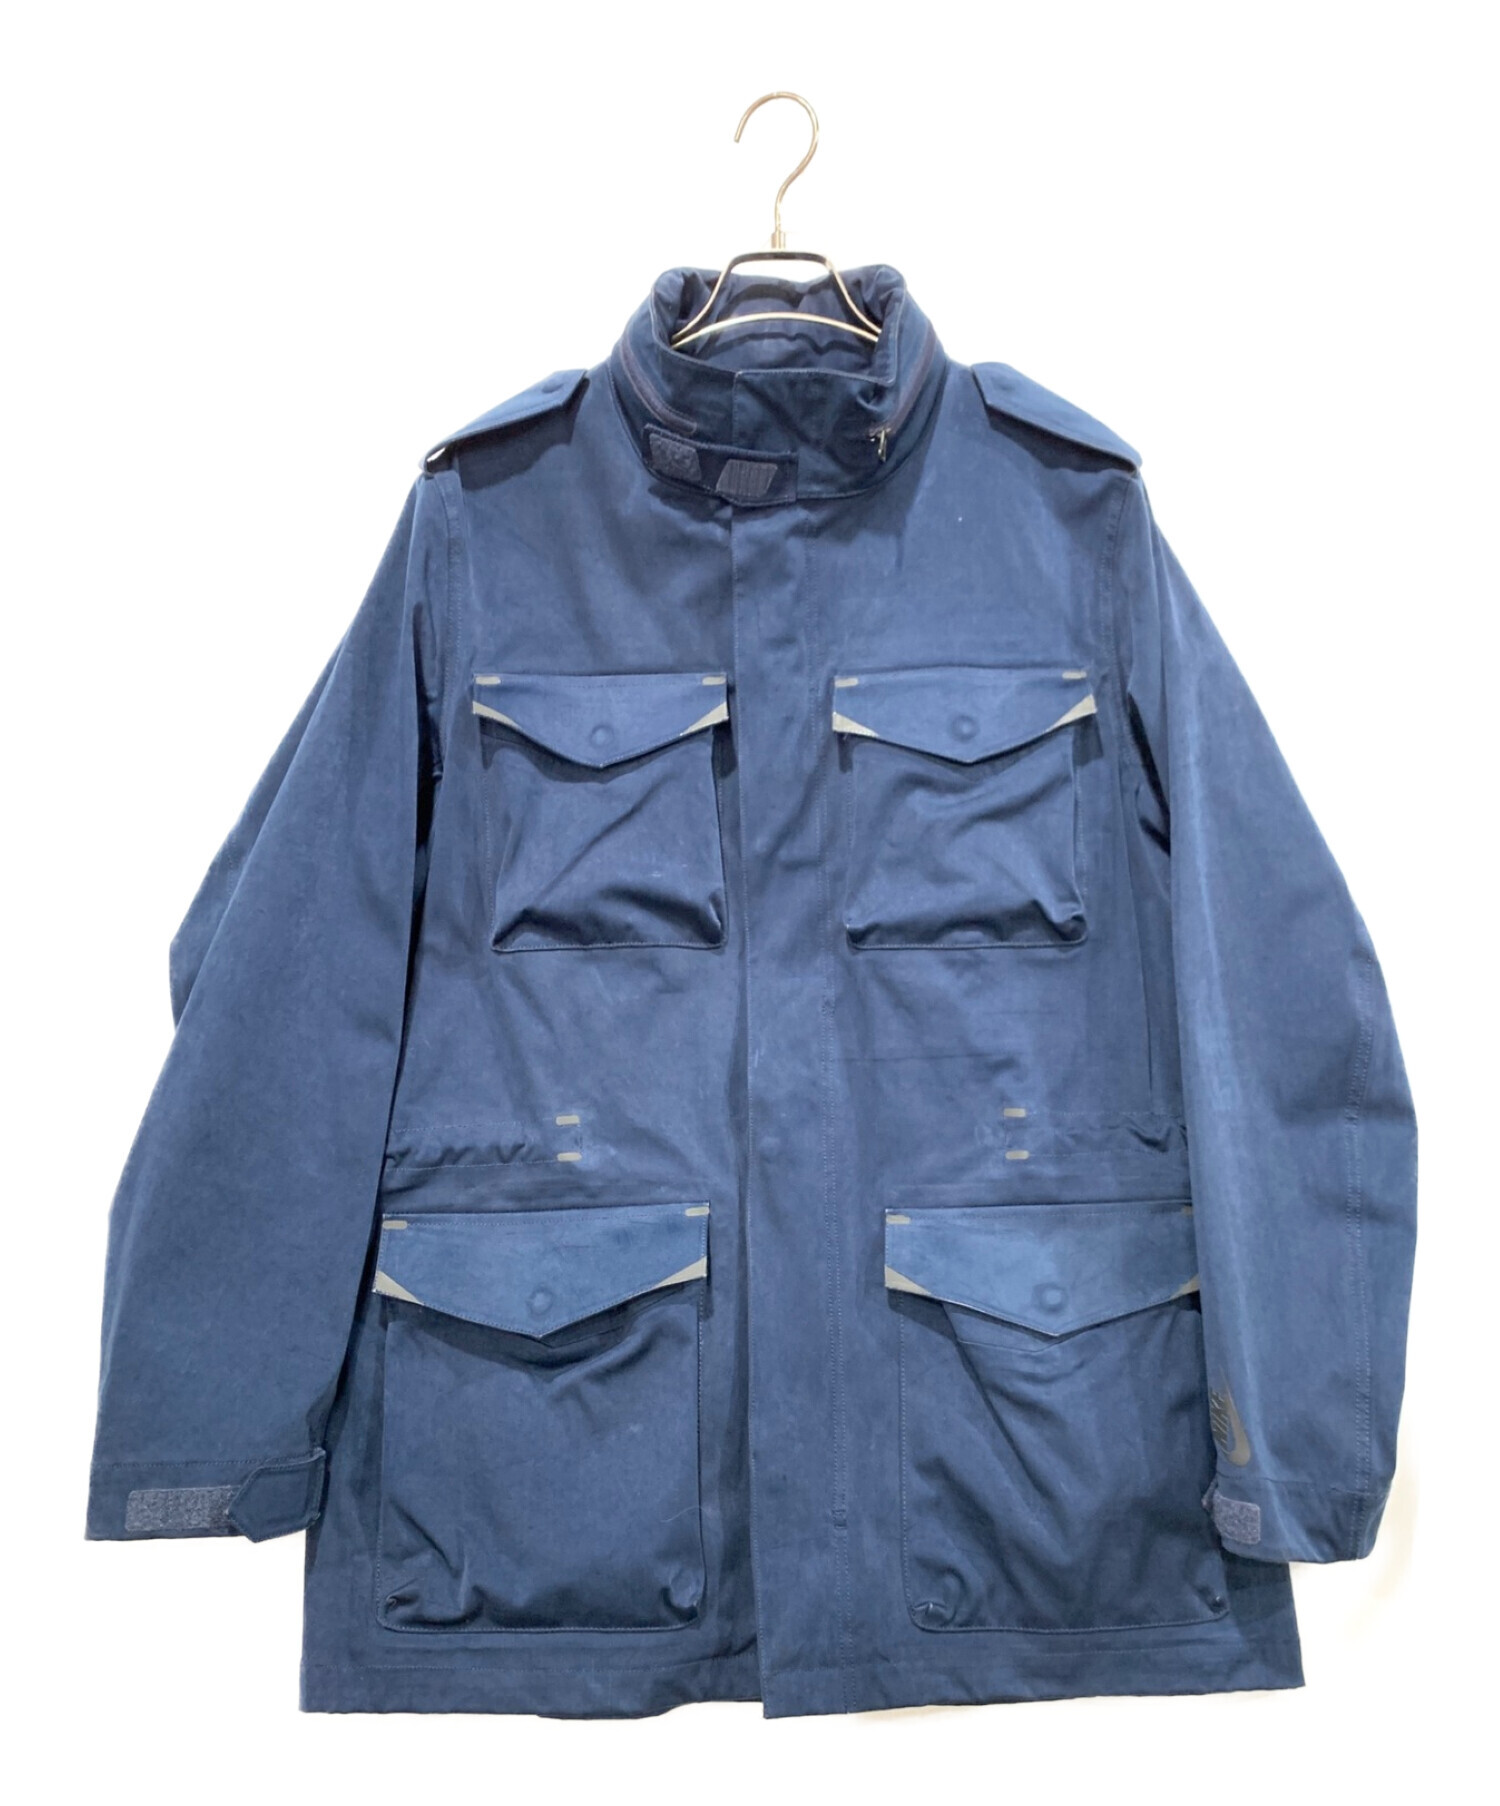 NIKE (ナイキ) Moleskin M65 Jacket ブルー サイズ:Lサイズ